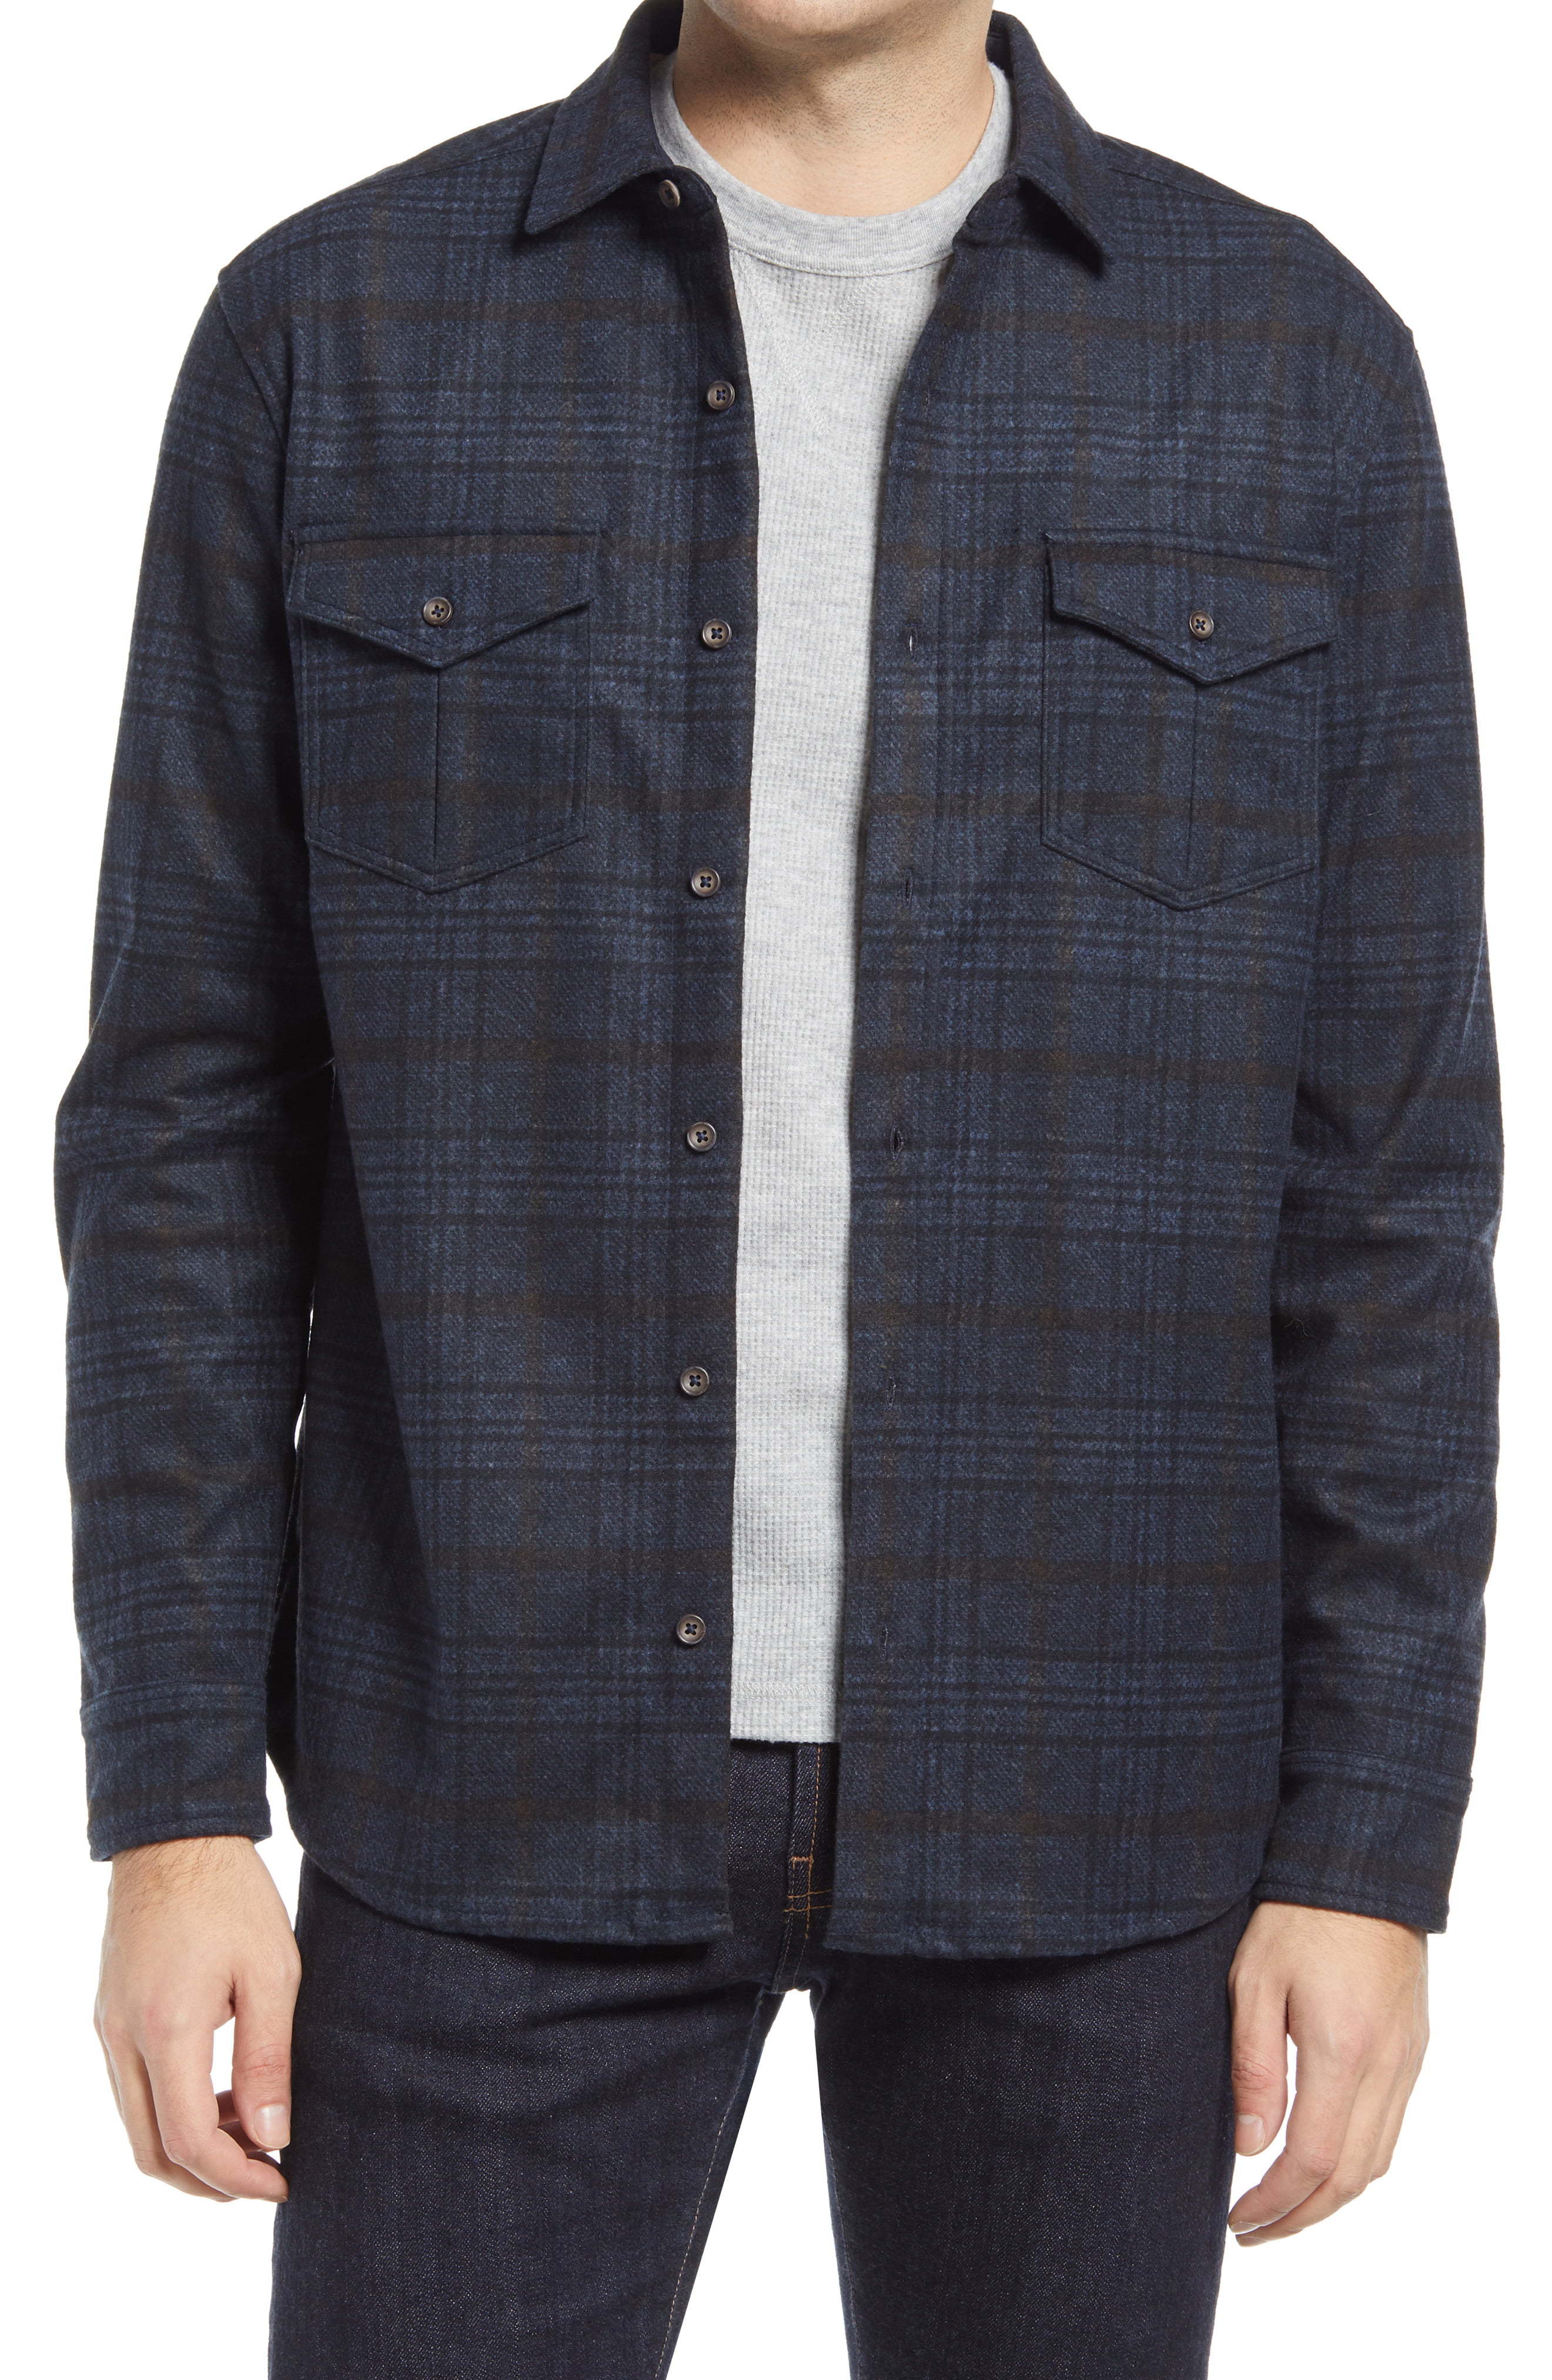 Johnston & Murphy Plaid Brushed Knit Shirt Jacket, $129 | Nordstrom ...